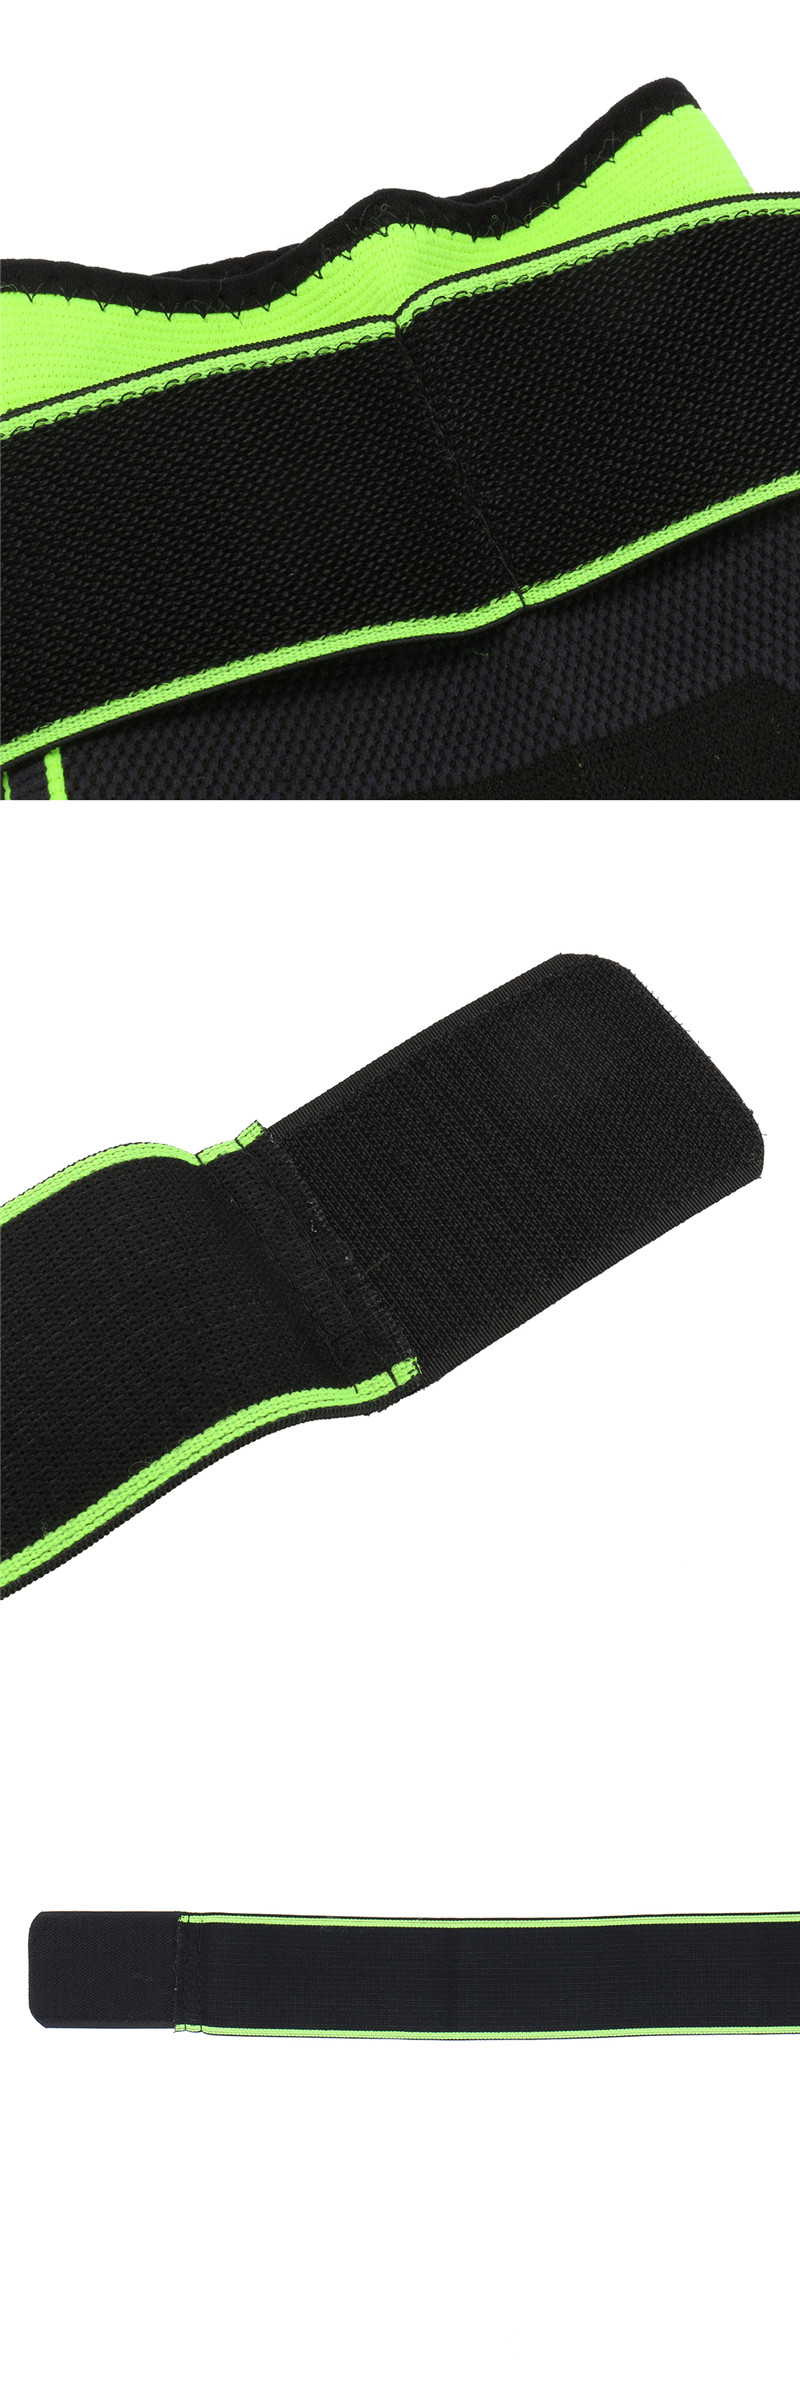 KALOAD-1Pcs-3D-Weaving-Knee-Brace-Breathable-Sleeve-Support-for-Running-Jogging-Sports-1197639-2